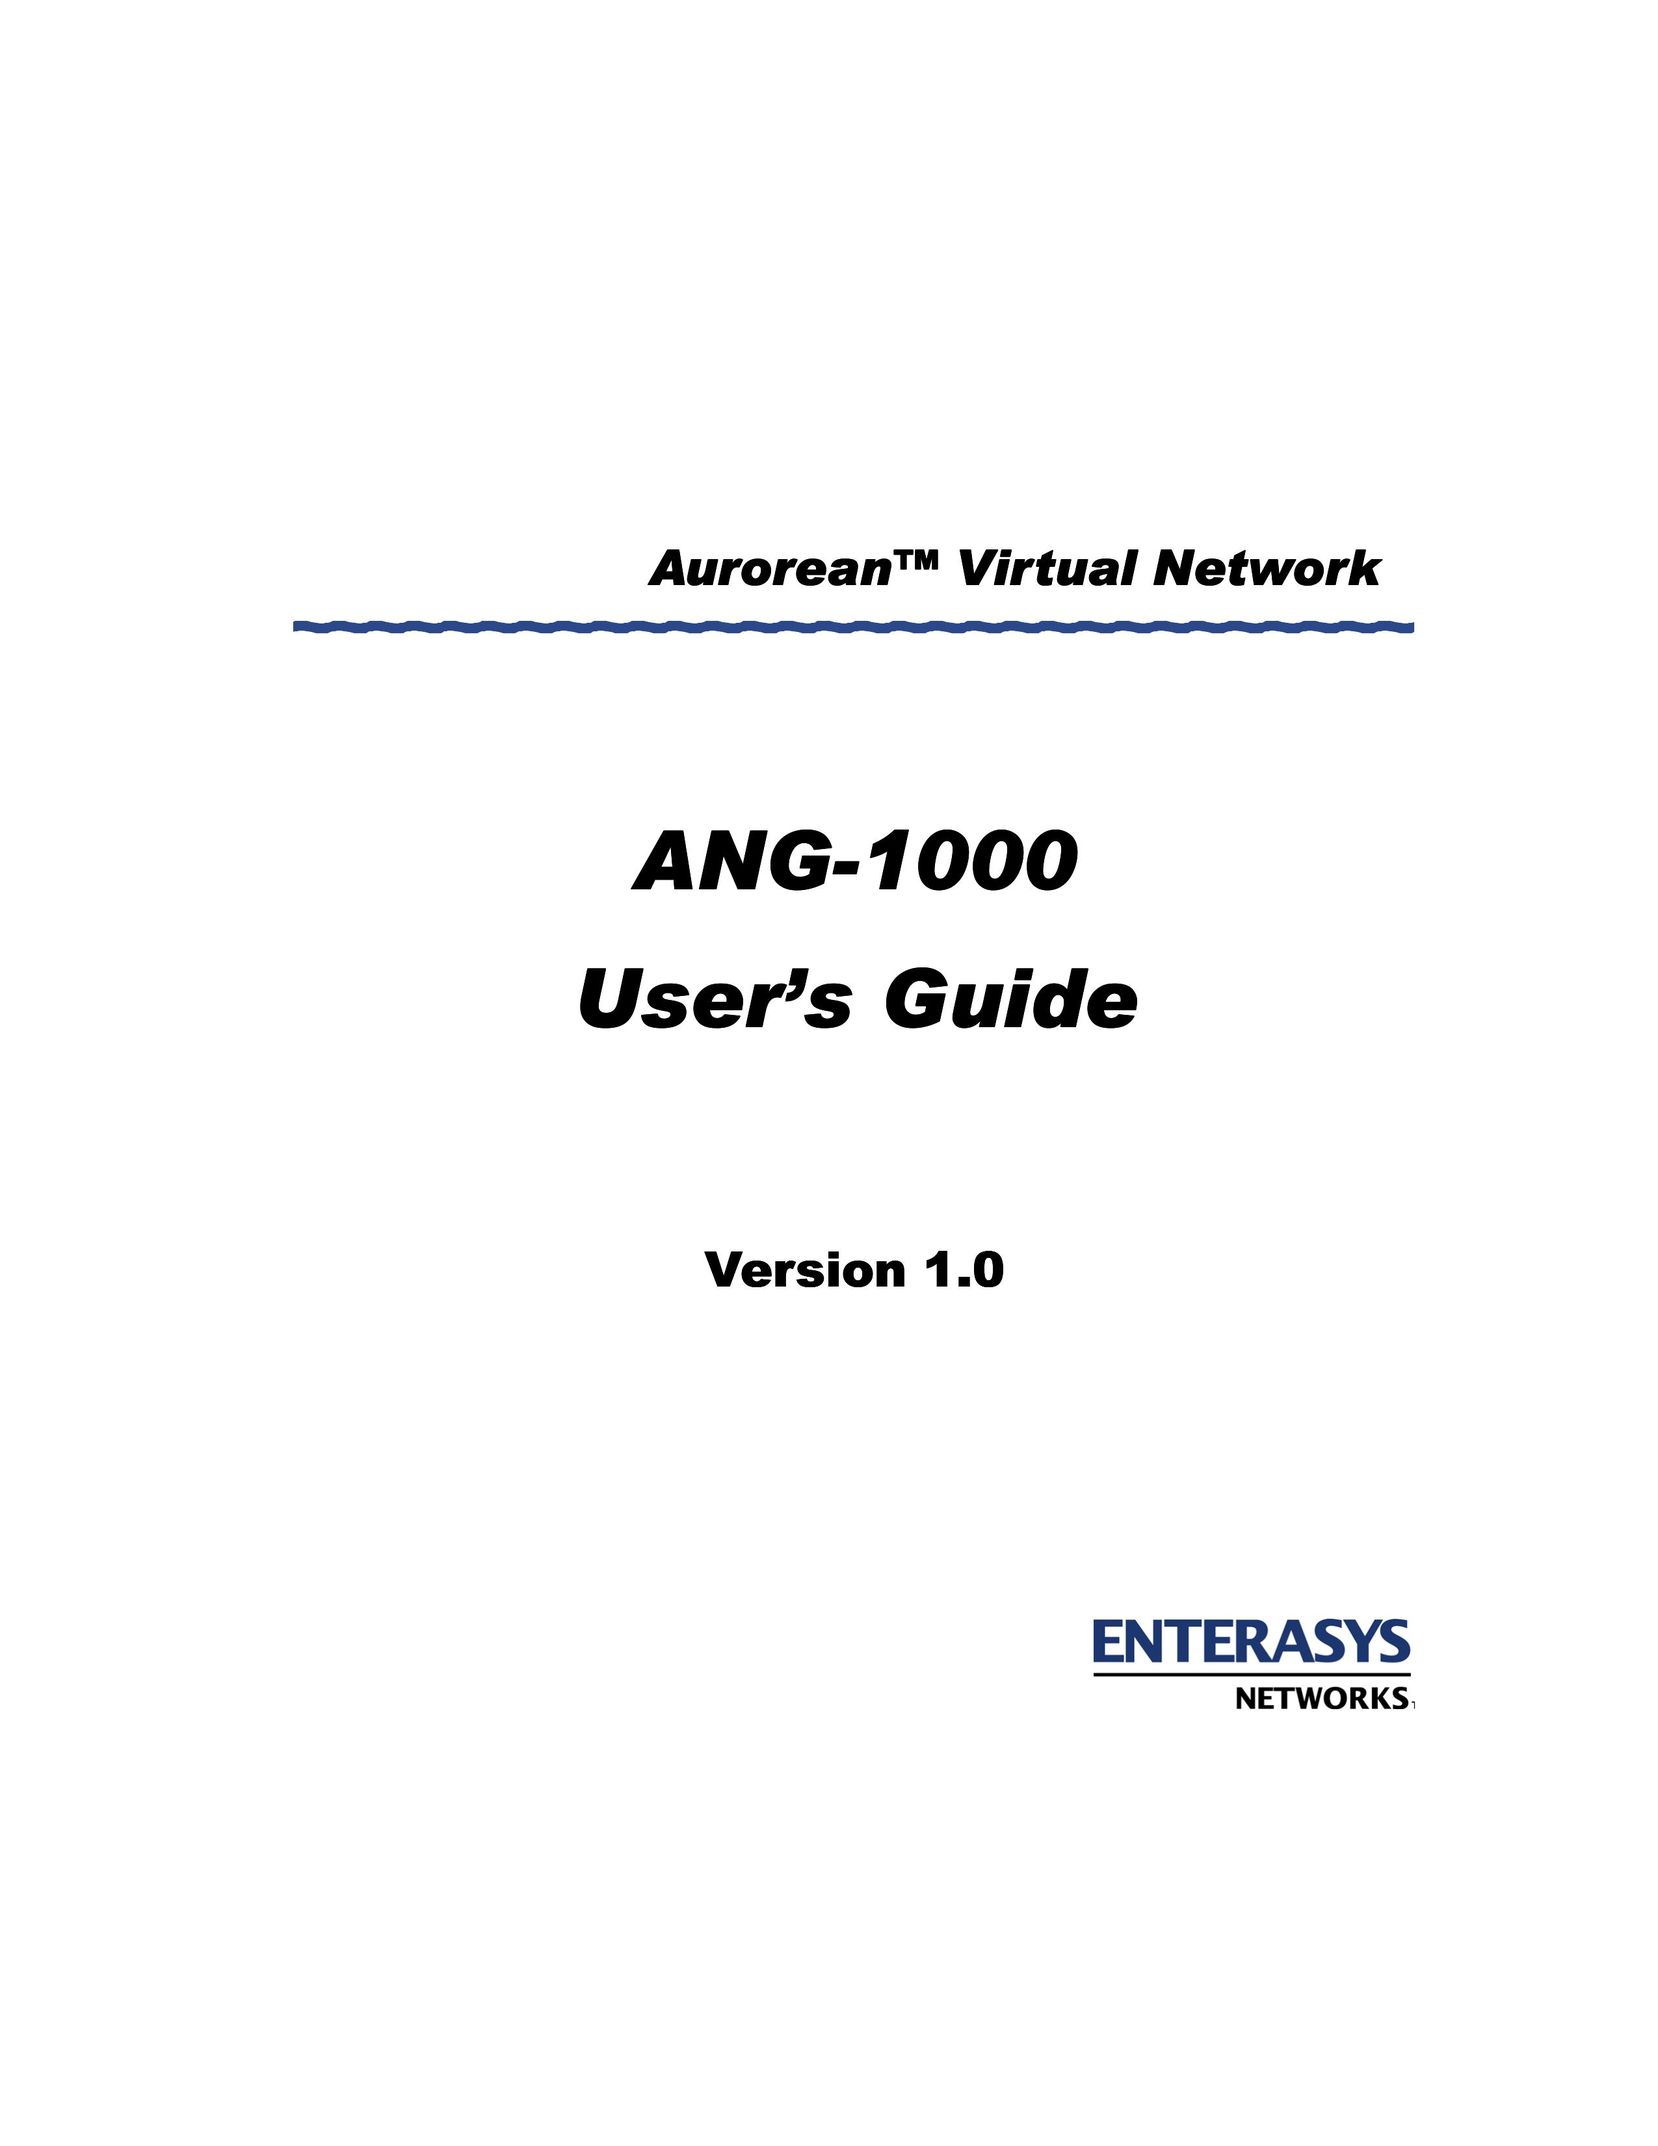 Enterasys Networks ANG-1000 Network Card User Manual